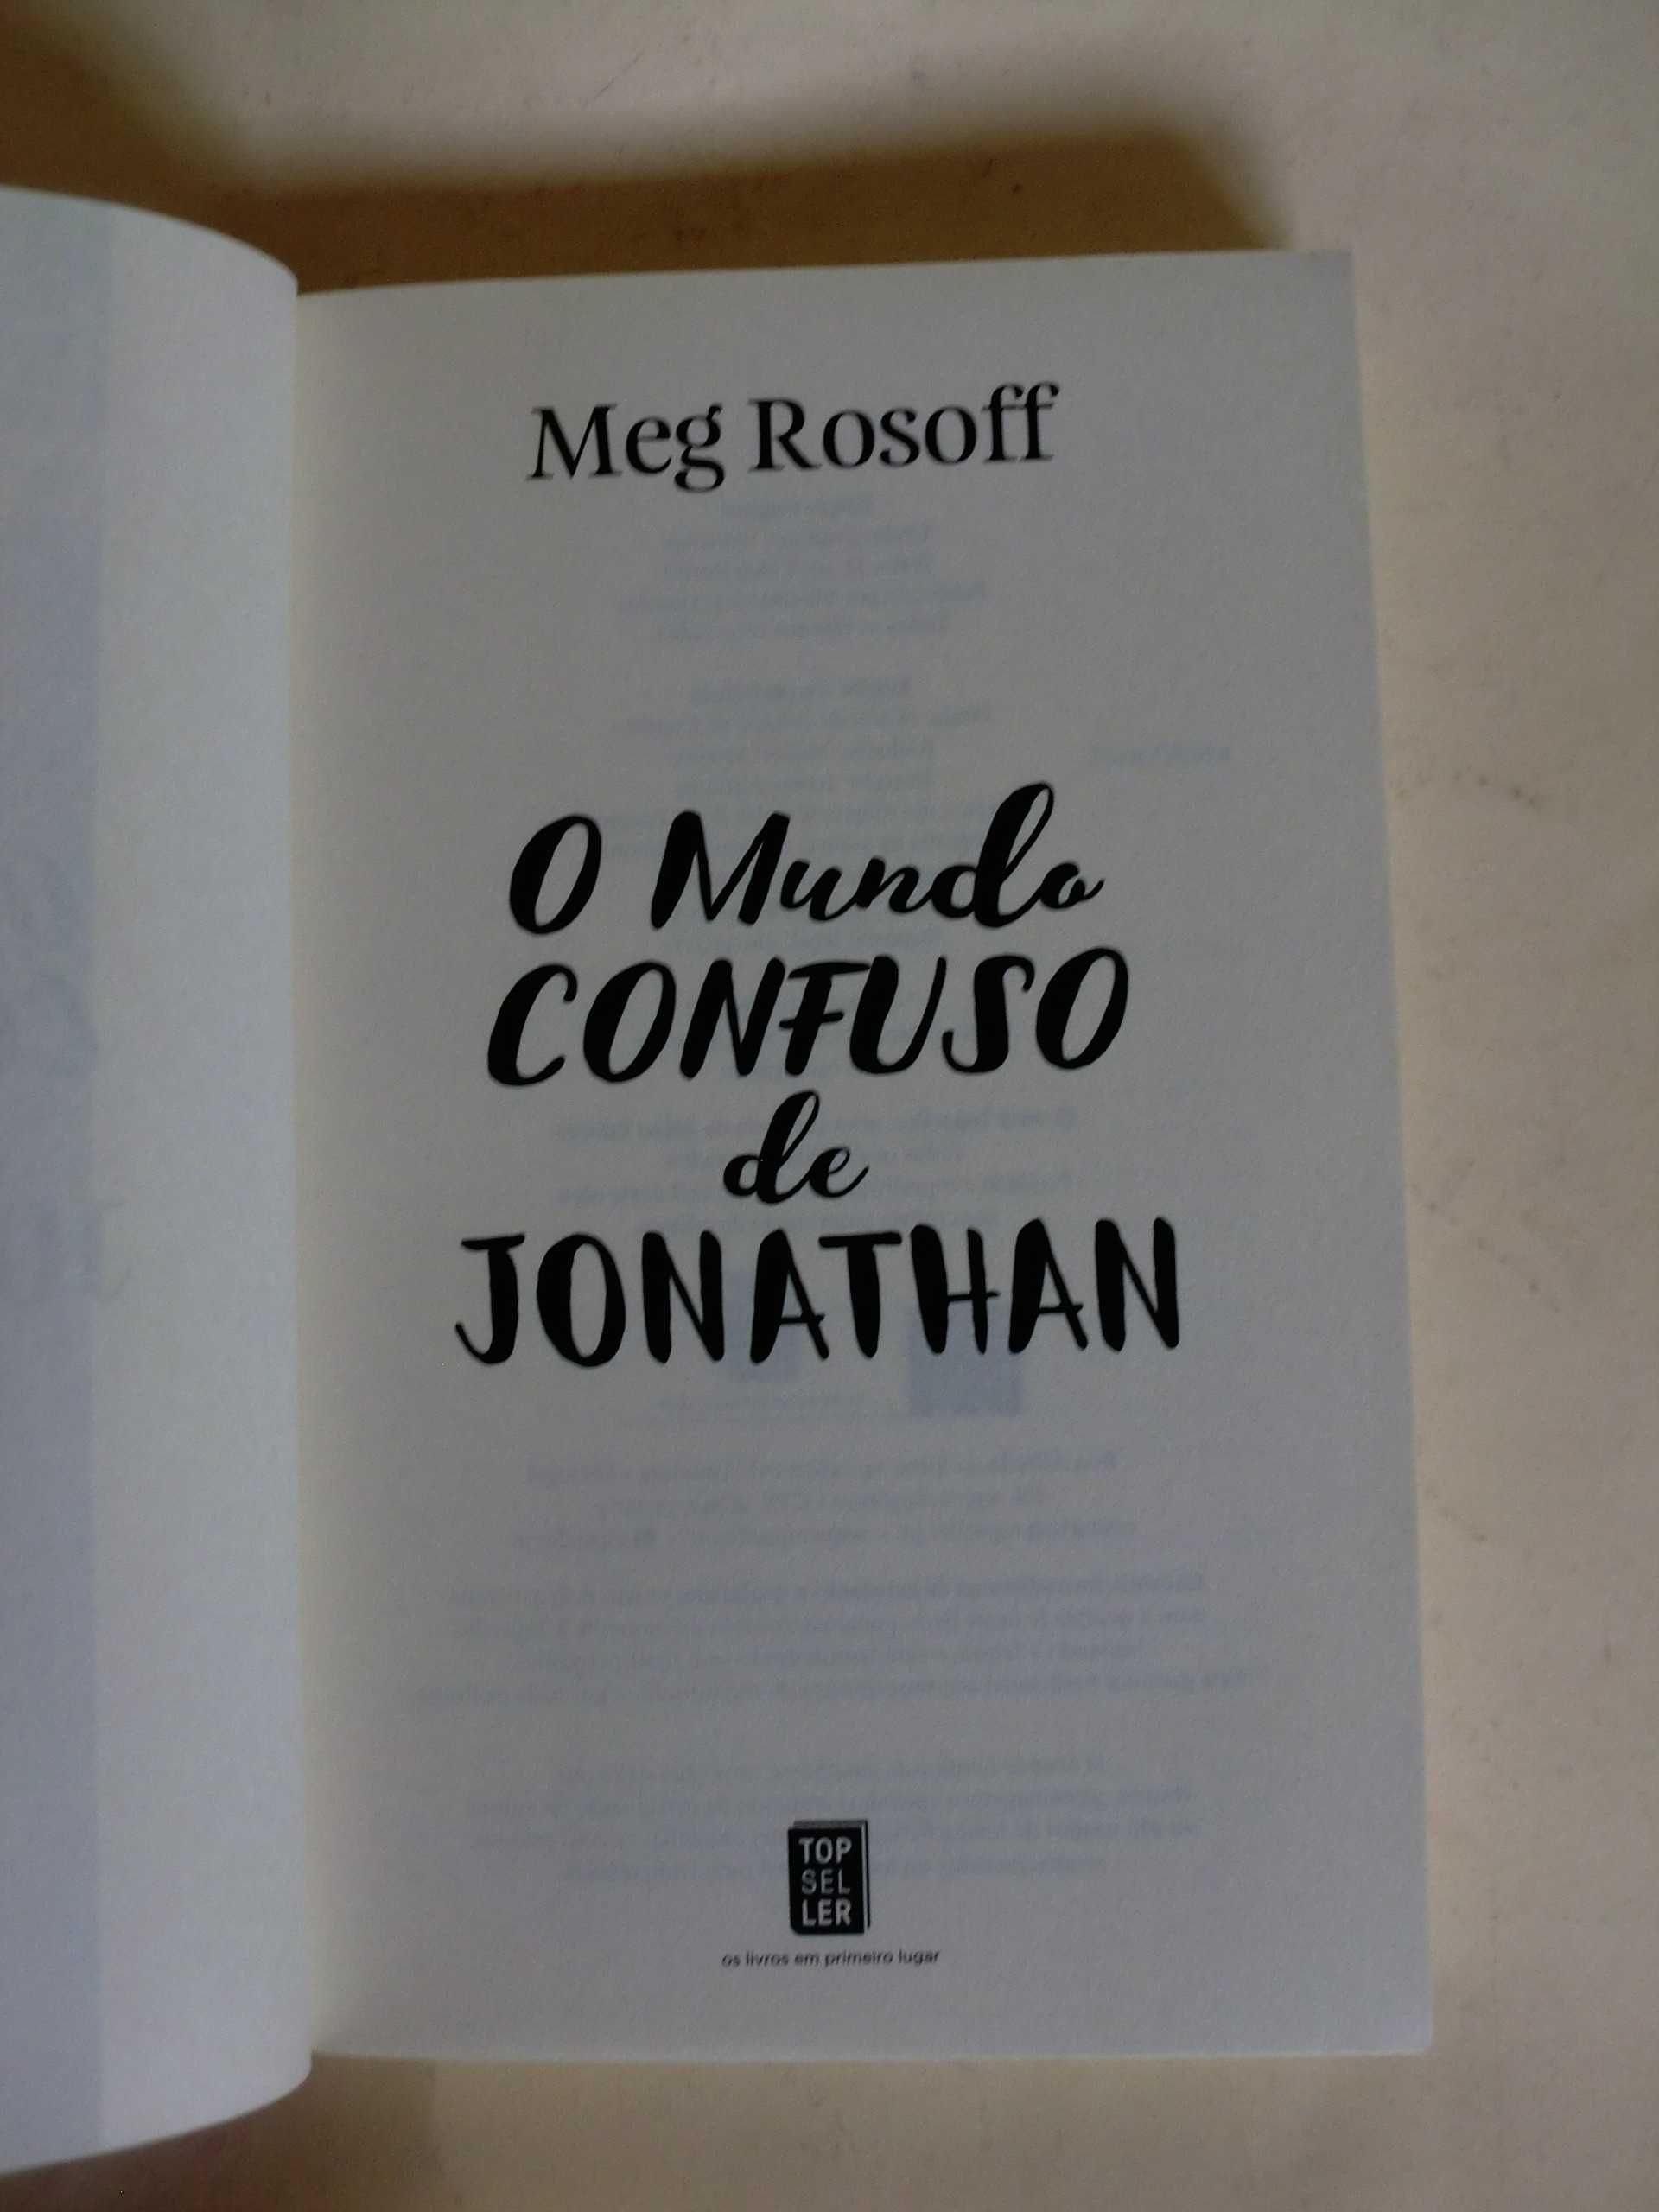 O Mundo Confuso de Jonathan
de Meg Rosoff